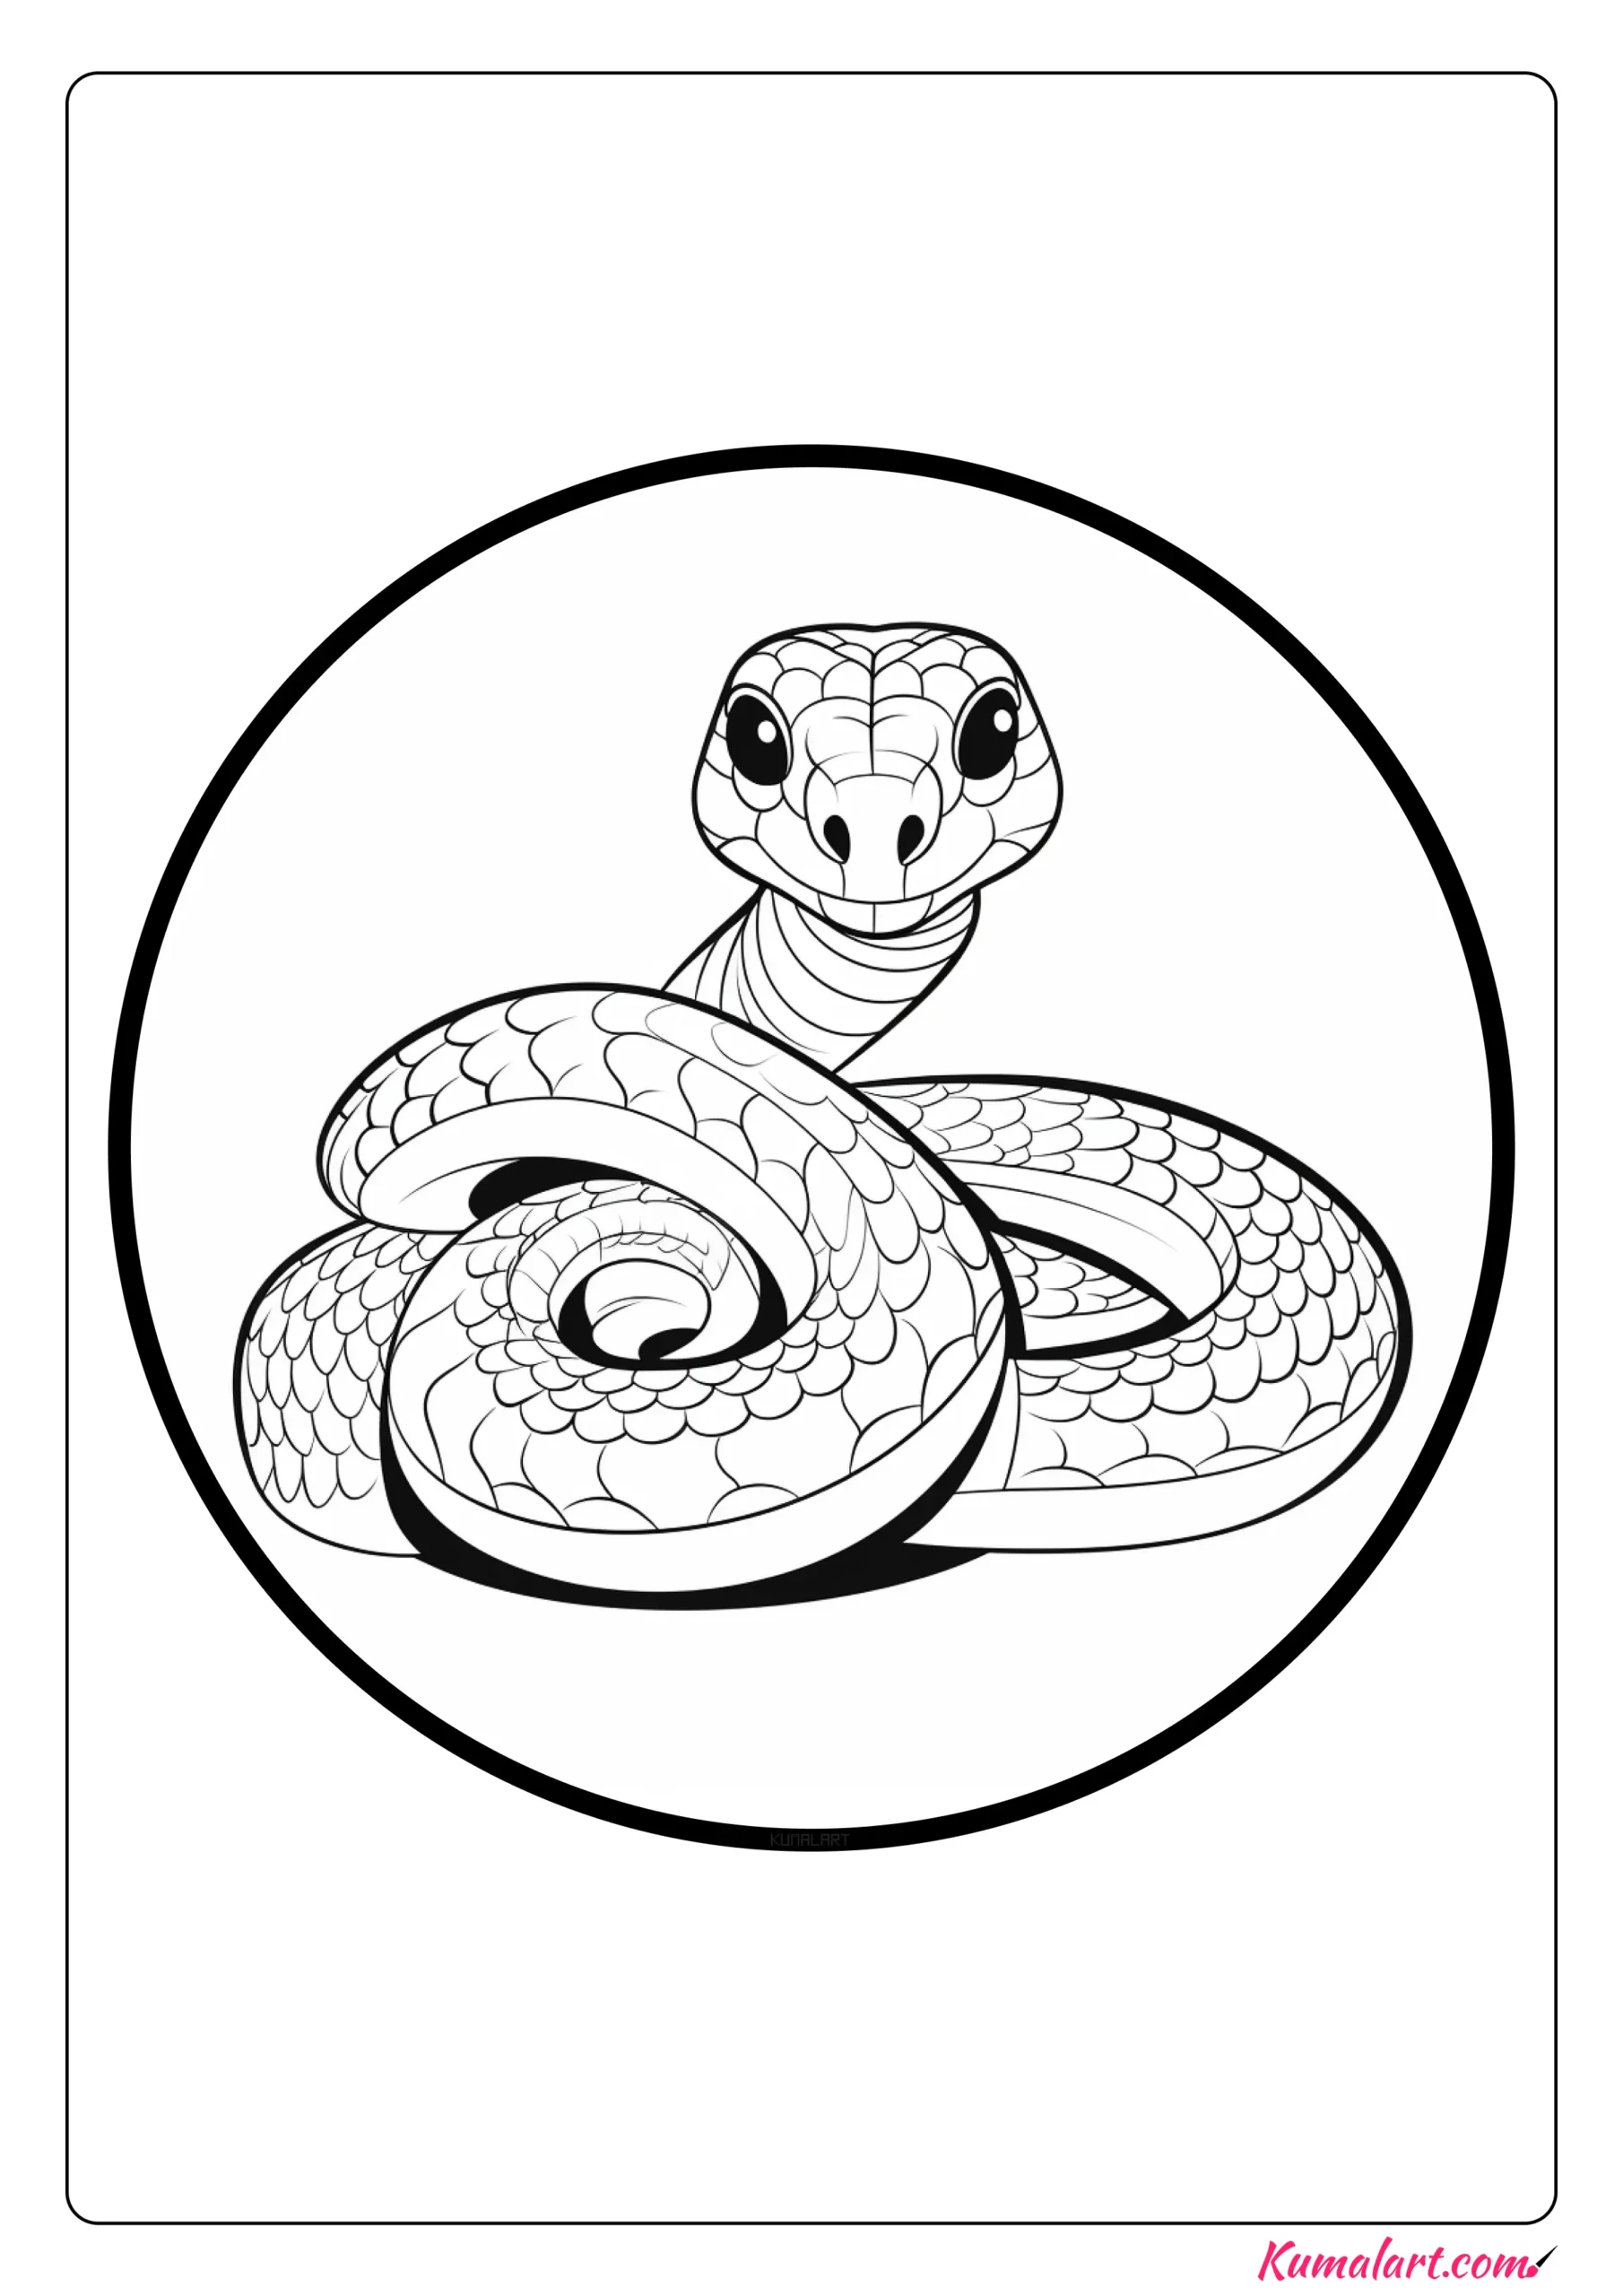 Canebrake Rattle Snake Coloring Page